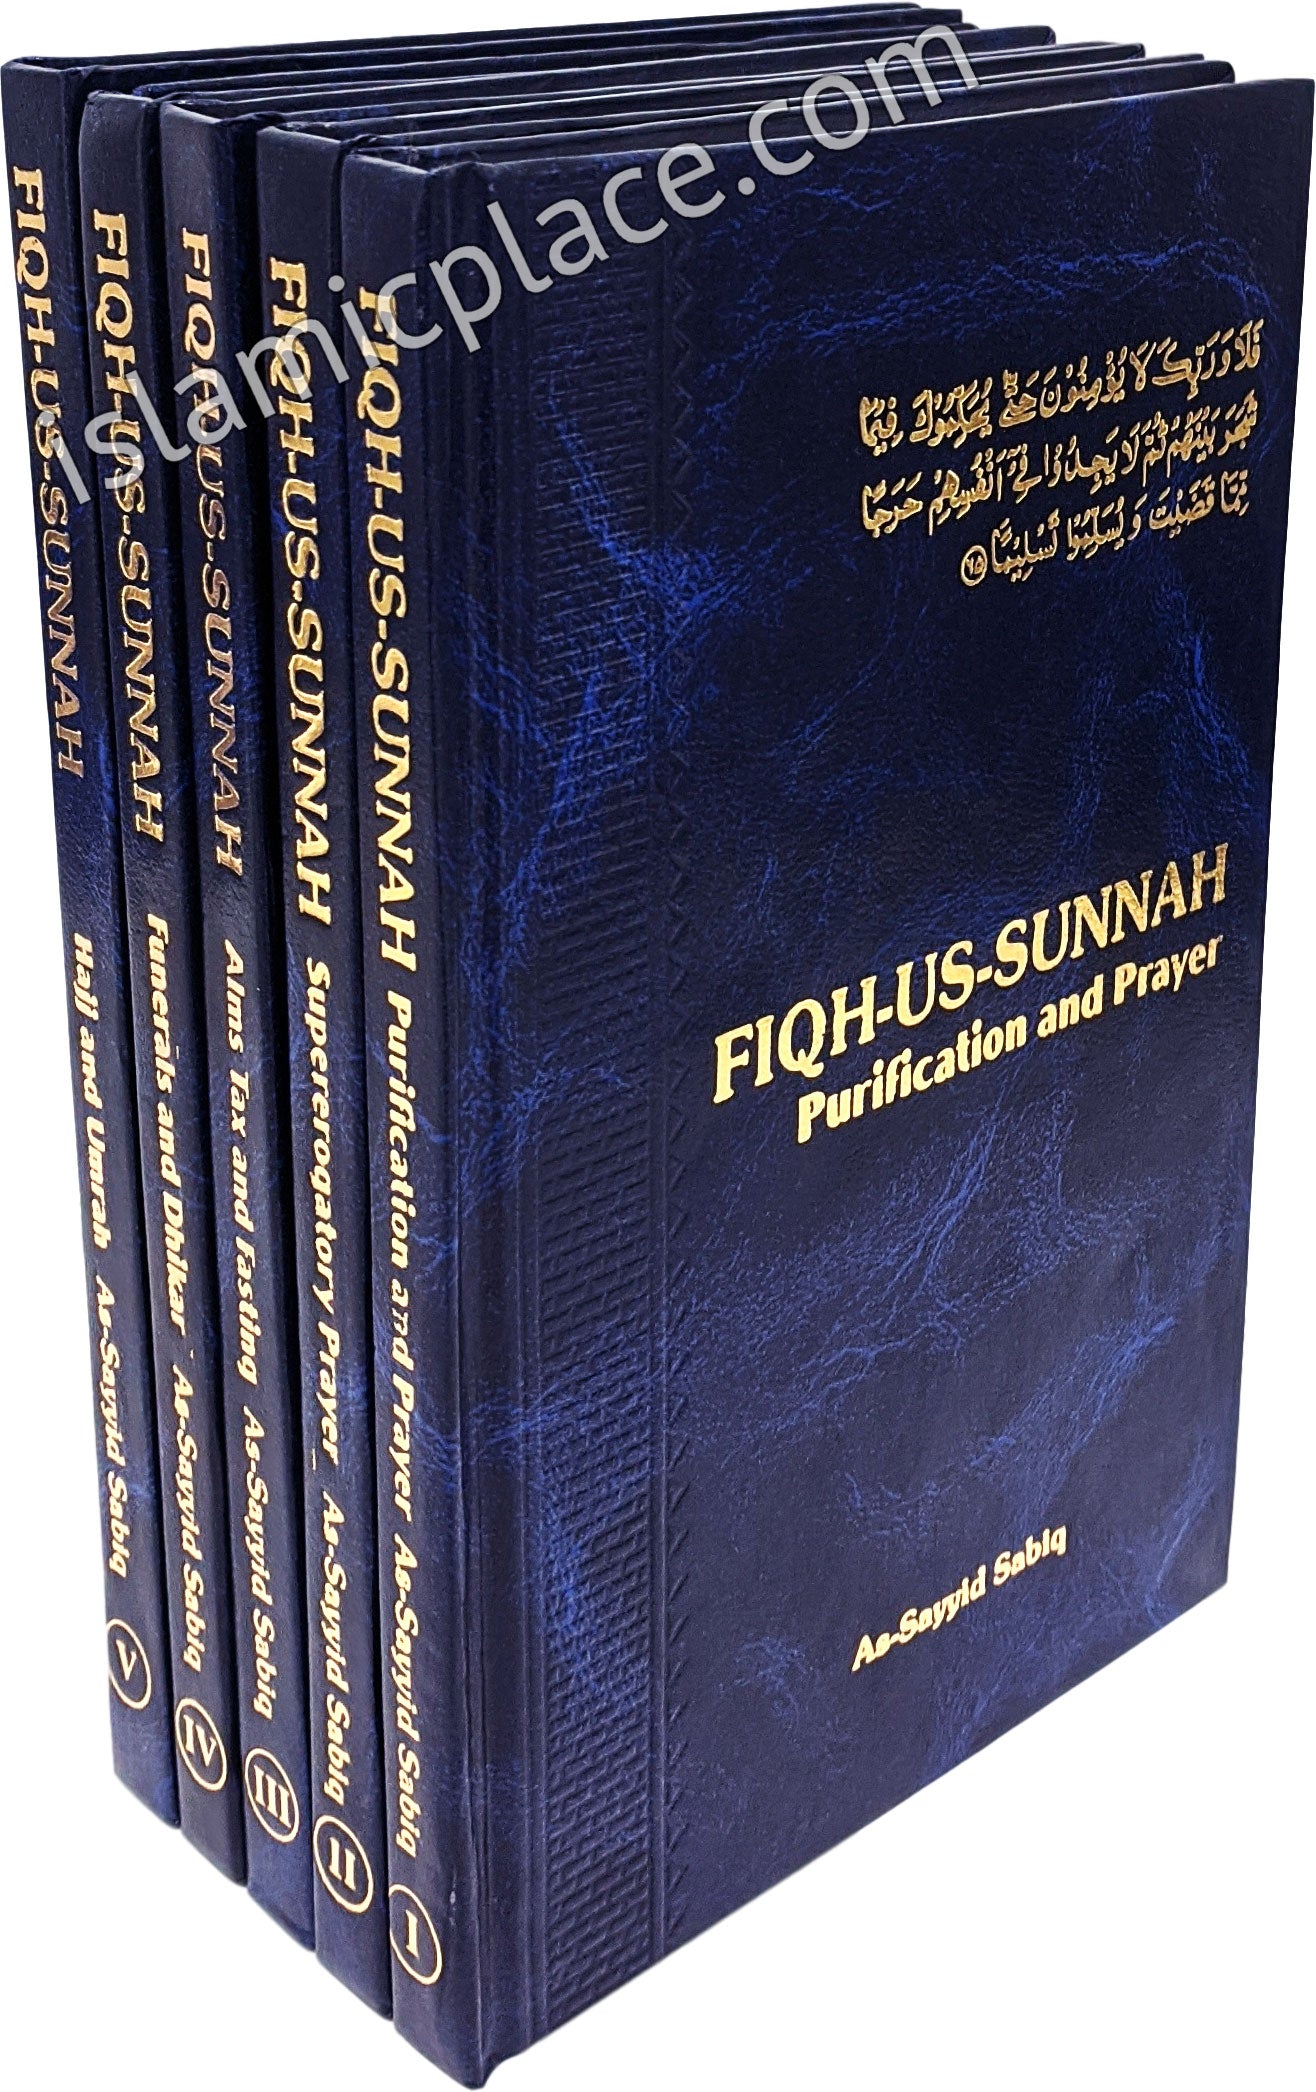 [5 vol set] Fiqh-us-Sunnah